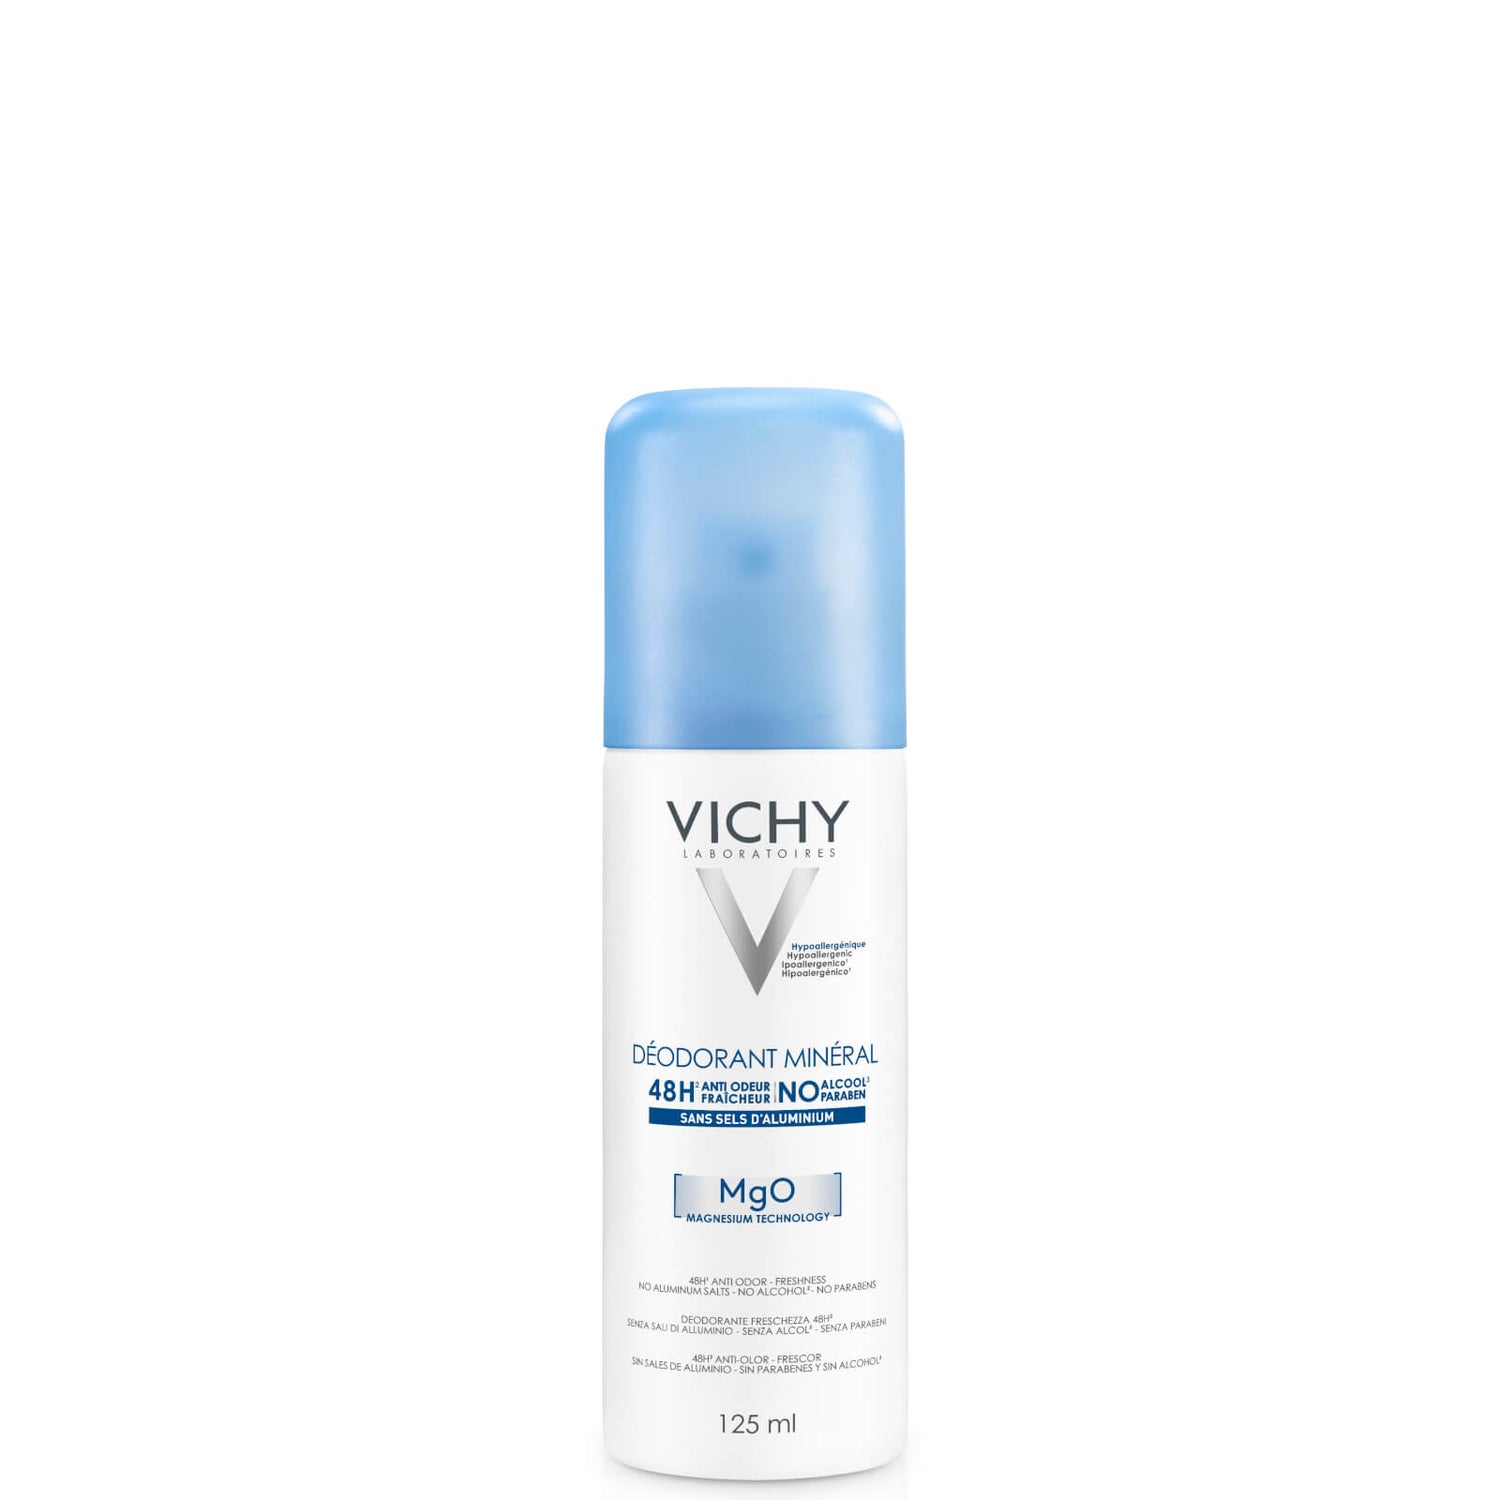 VICHY 48 Hour Mineral Deodorant Spray 125ml